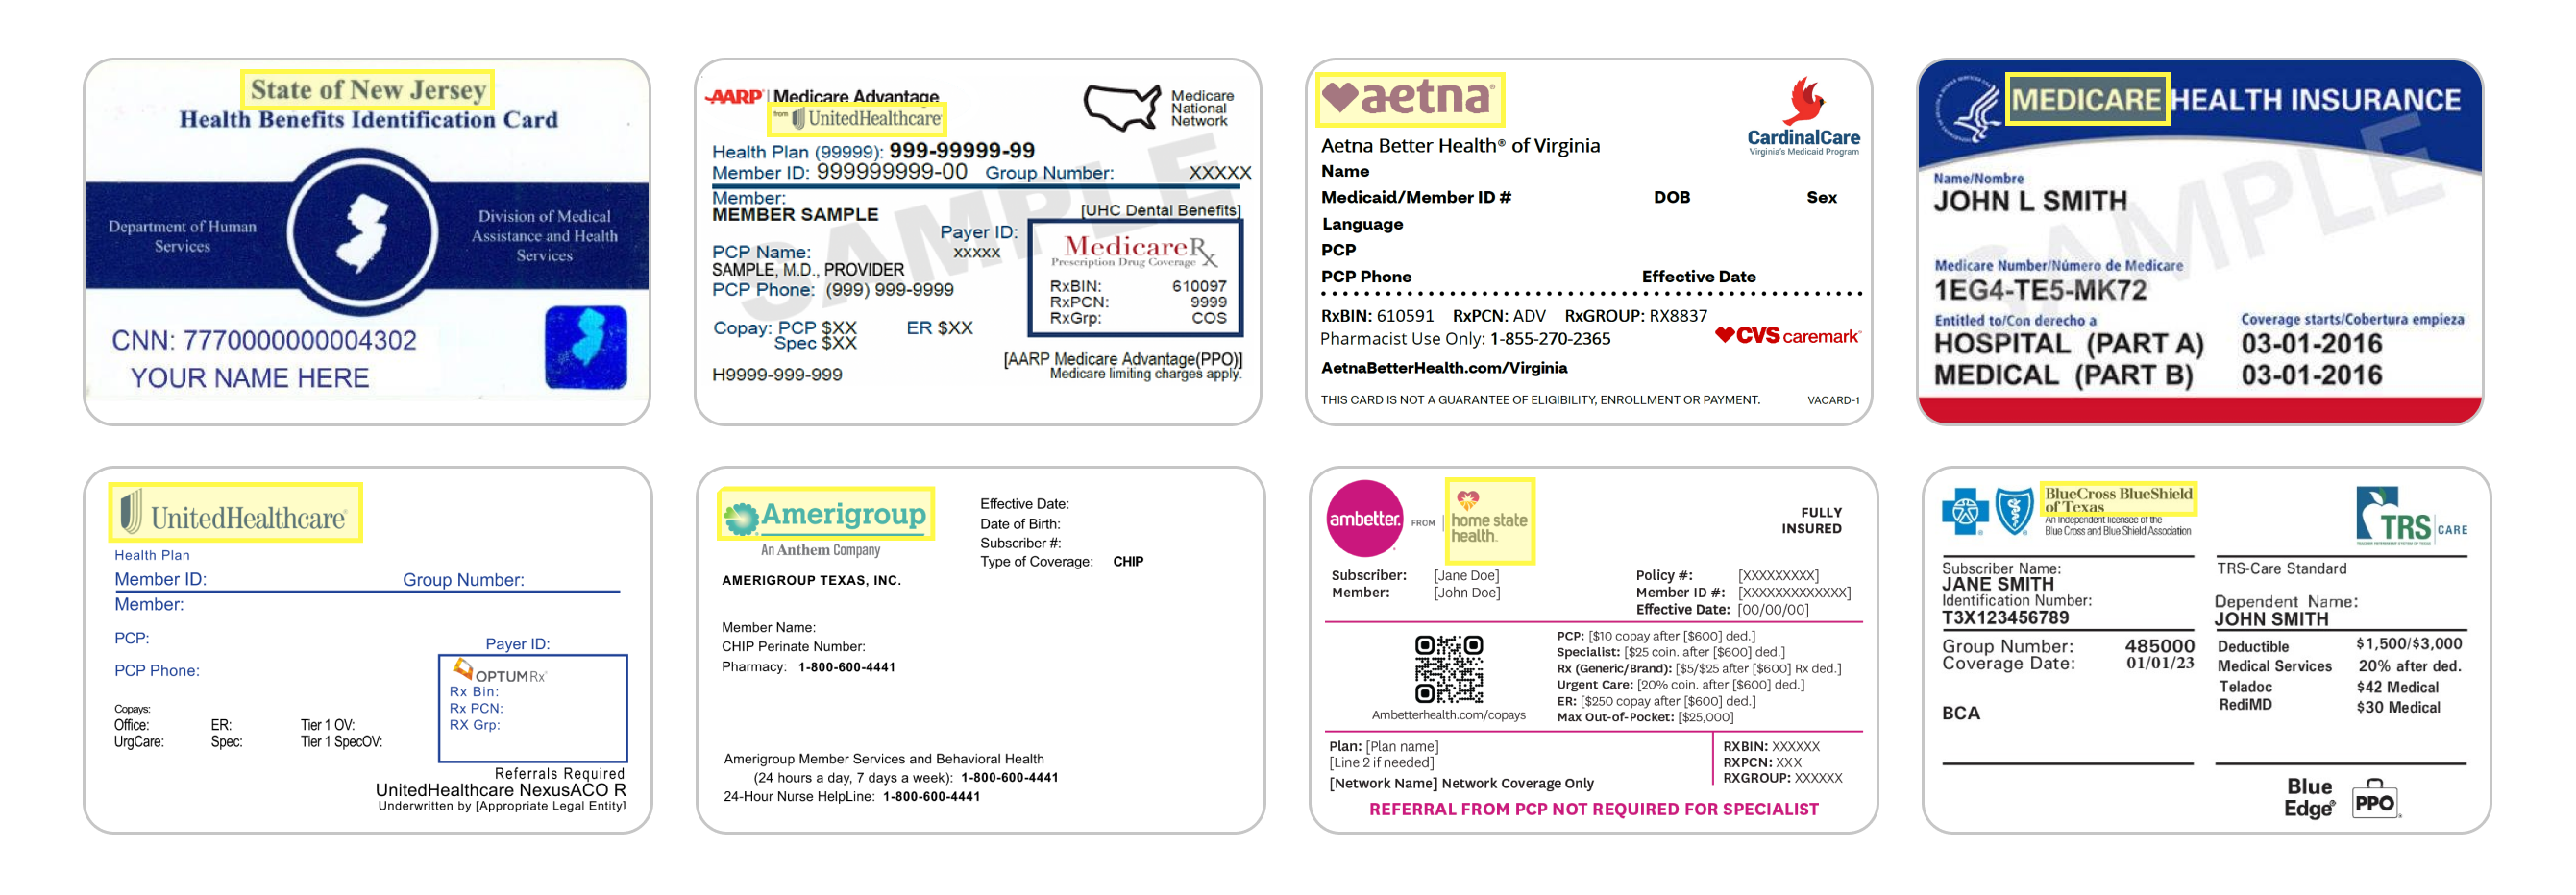 Flexpa Docs Insurance Card Examples